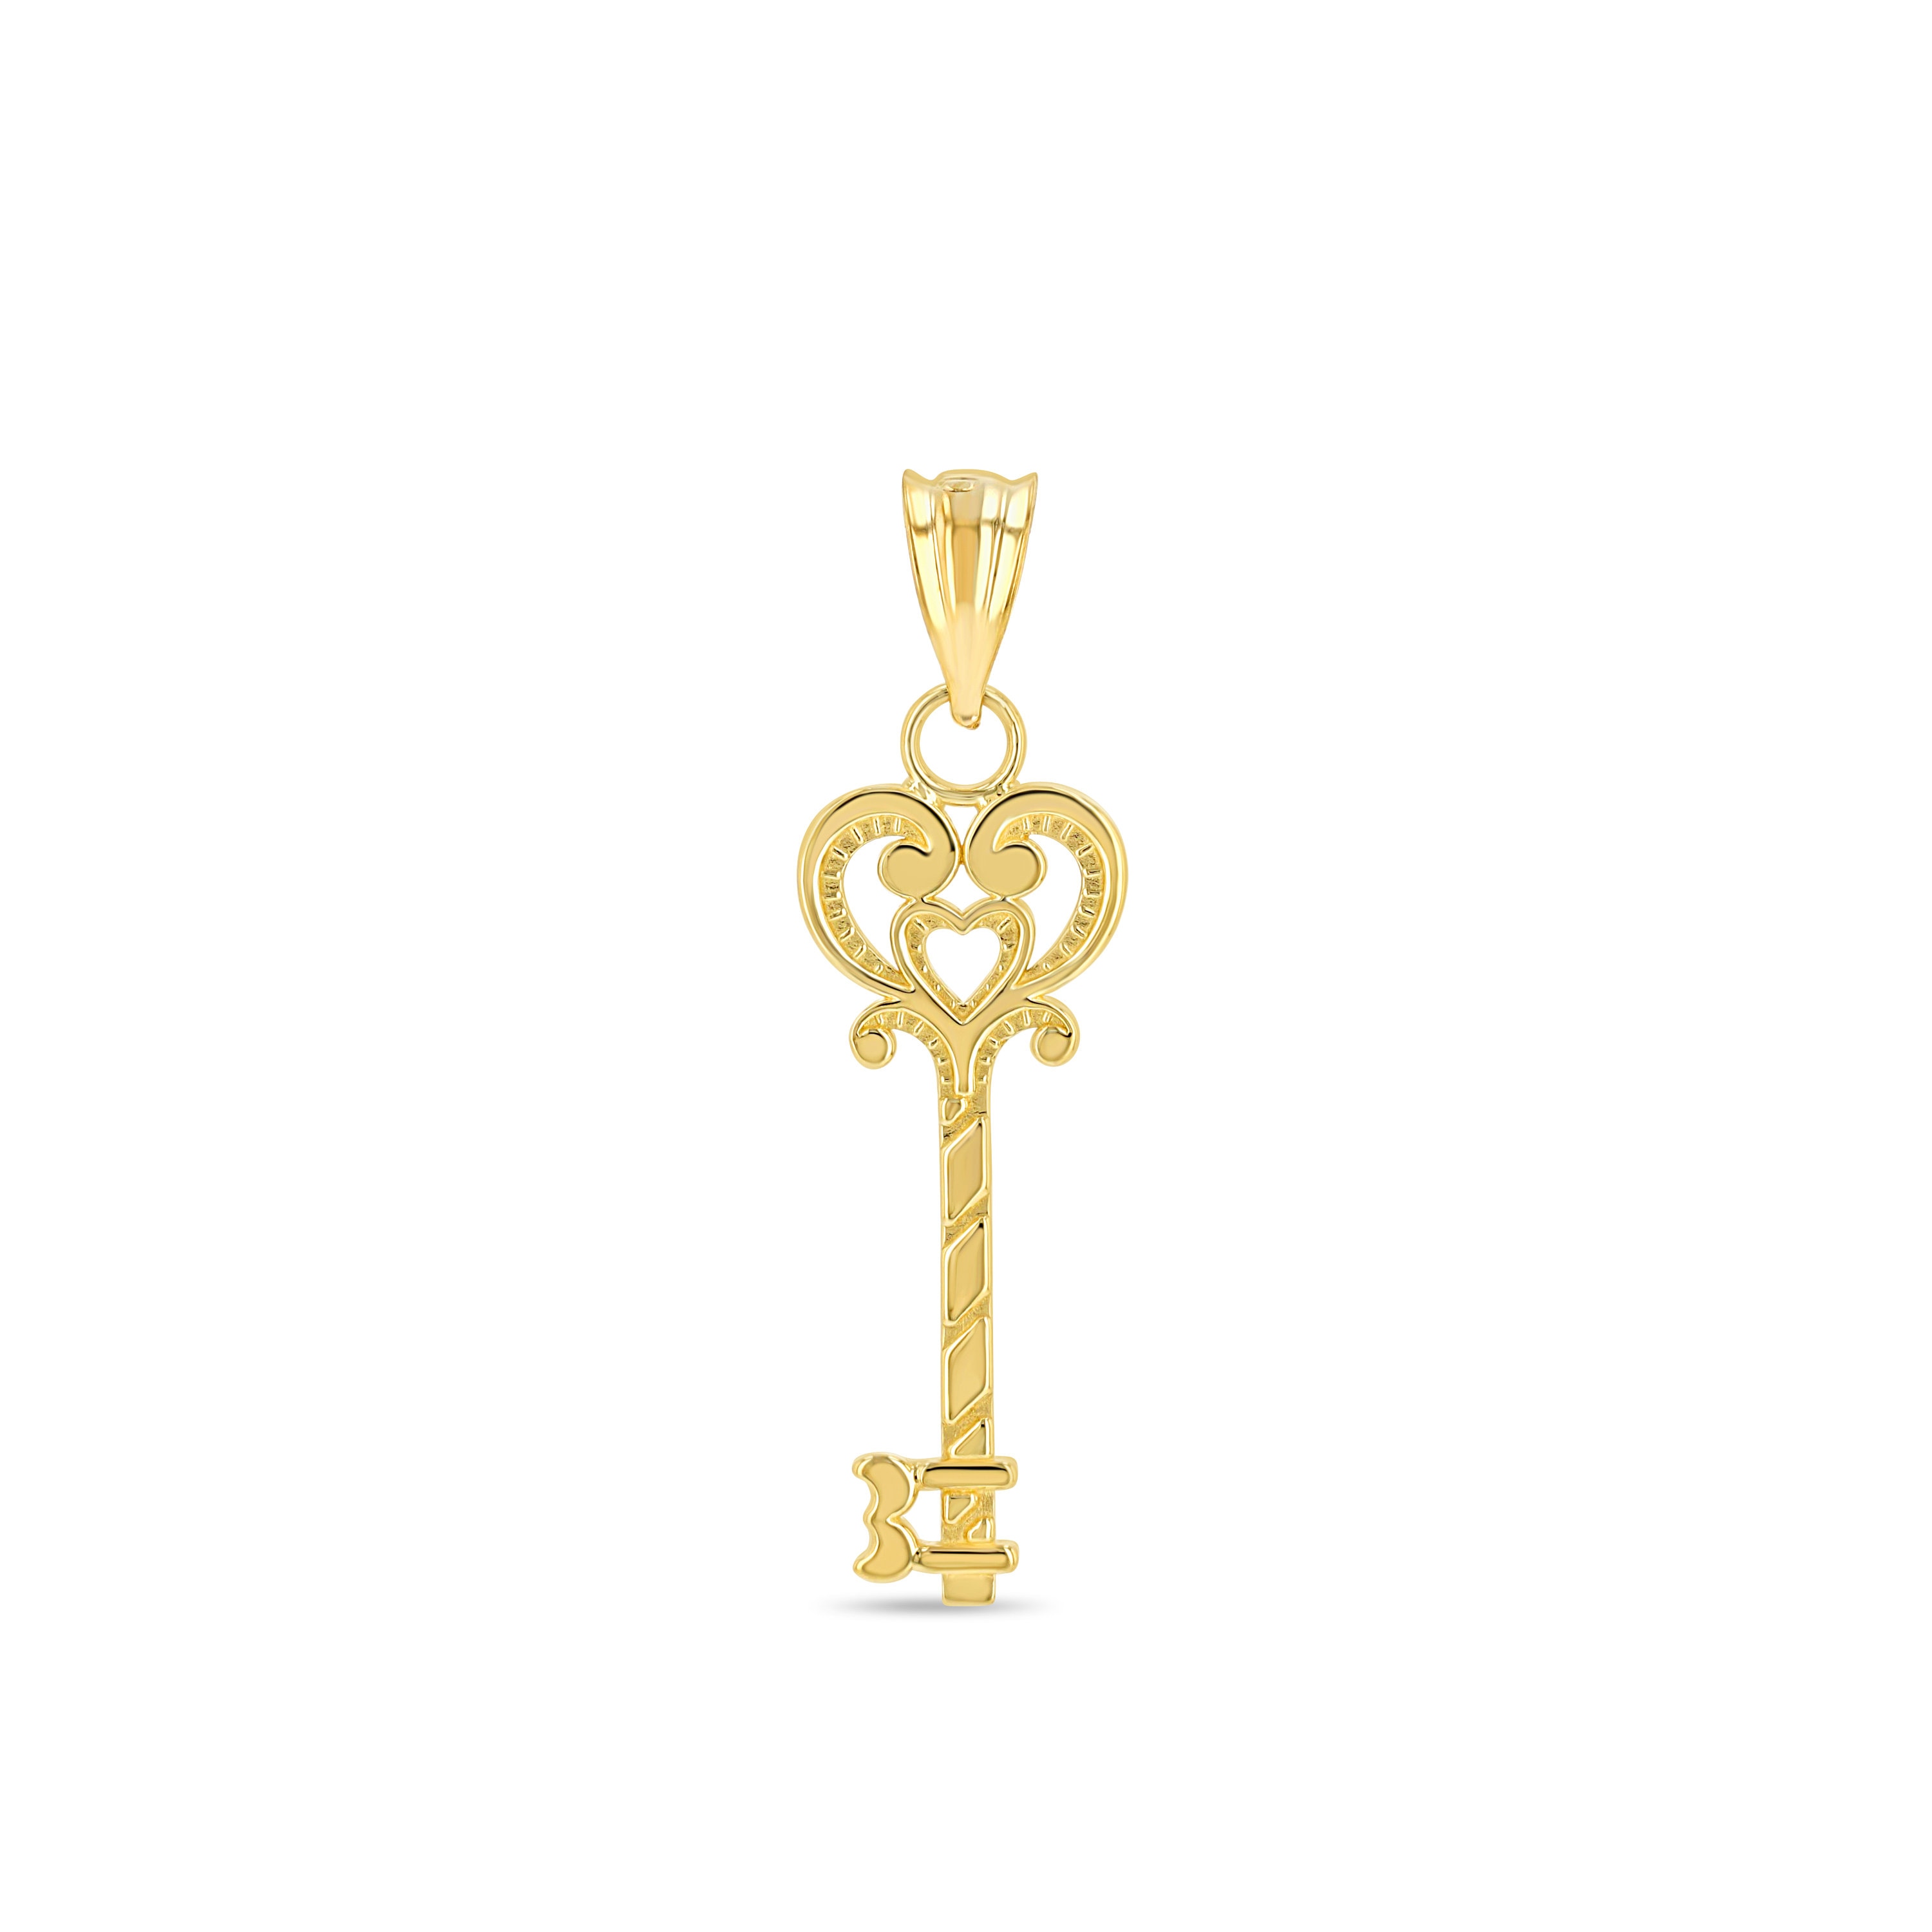 KitBeads 20pcs 18k Real Gold Plated Key Charms Brass Key Lock Charms Small  Gold Key Shape Charms for Jewelry Making Bracelets Necklace Bulk